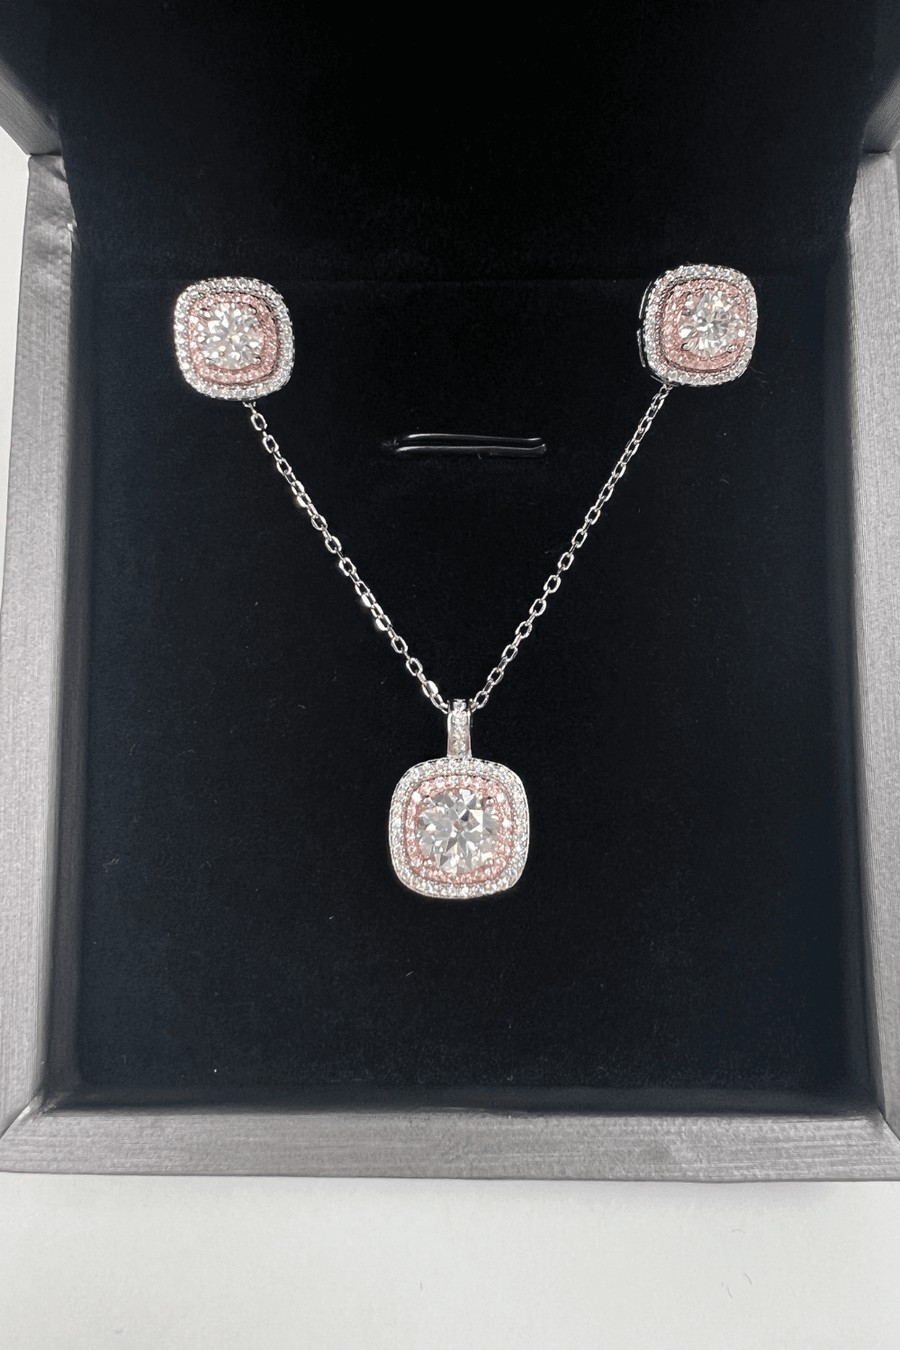 Best Diamond Jewelry Bundle Set Gift | Best Geometric Diamond Necklace, Earrings Jewelry Gift for Women, Mother, Wife, Daughter | MASON New York